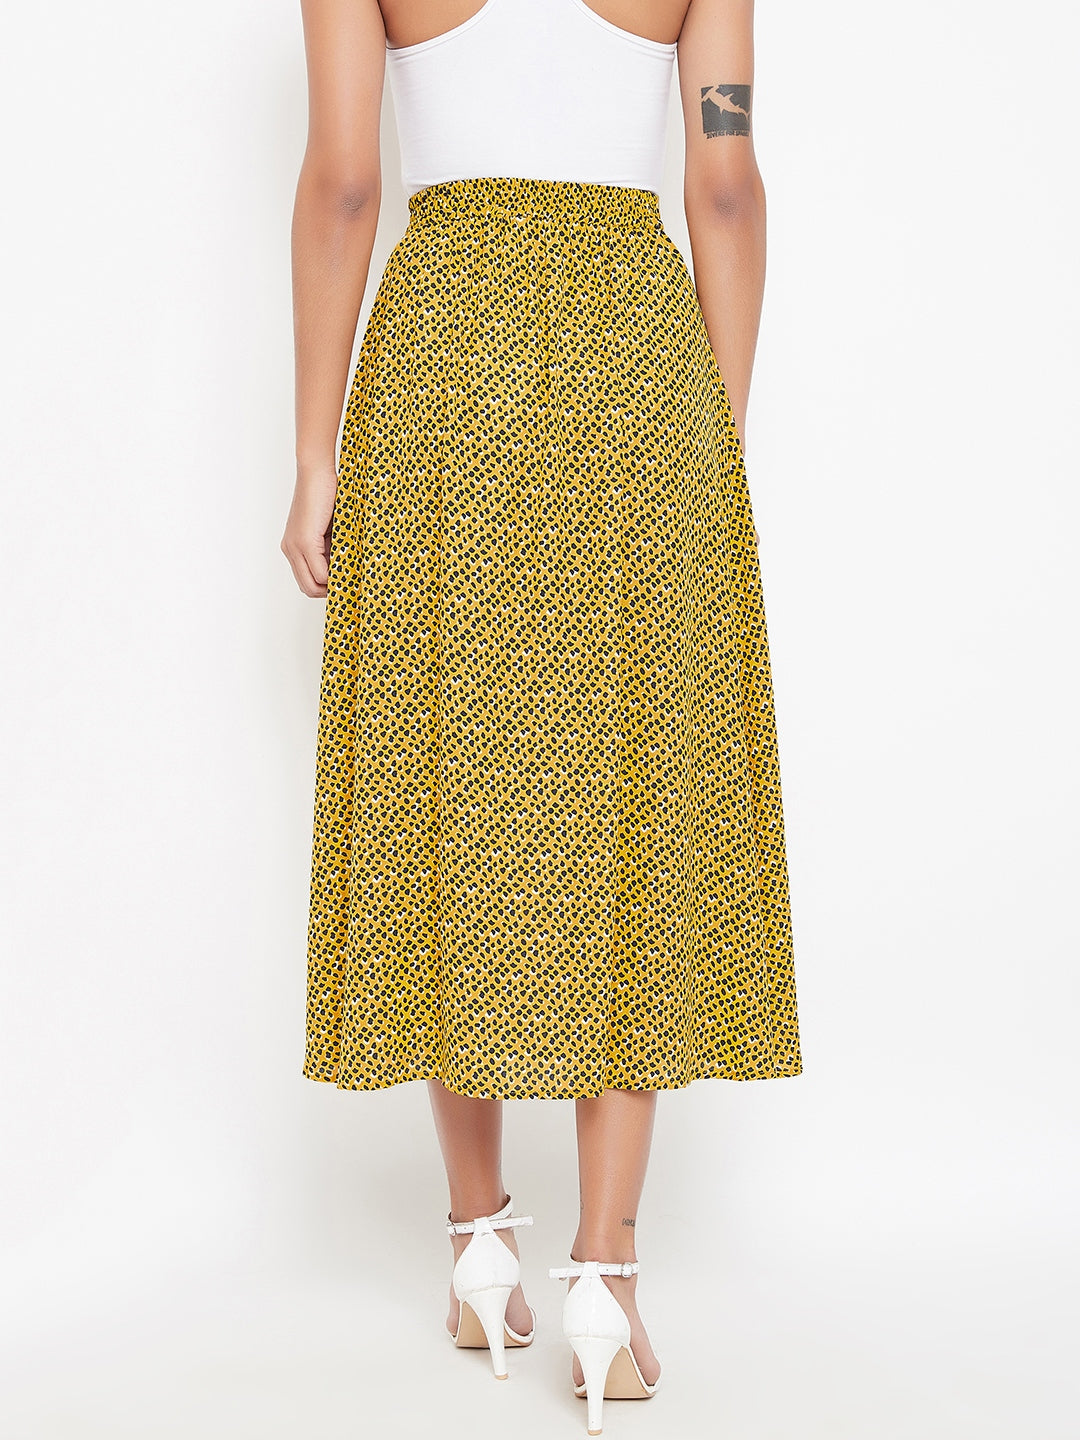 Berrylush Women Yellow & Black Animal Printed Front Slit A-Line Midi Skirt